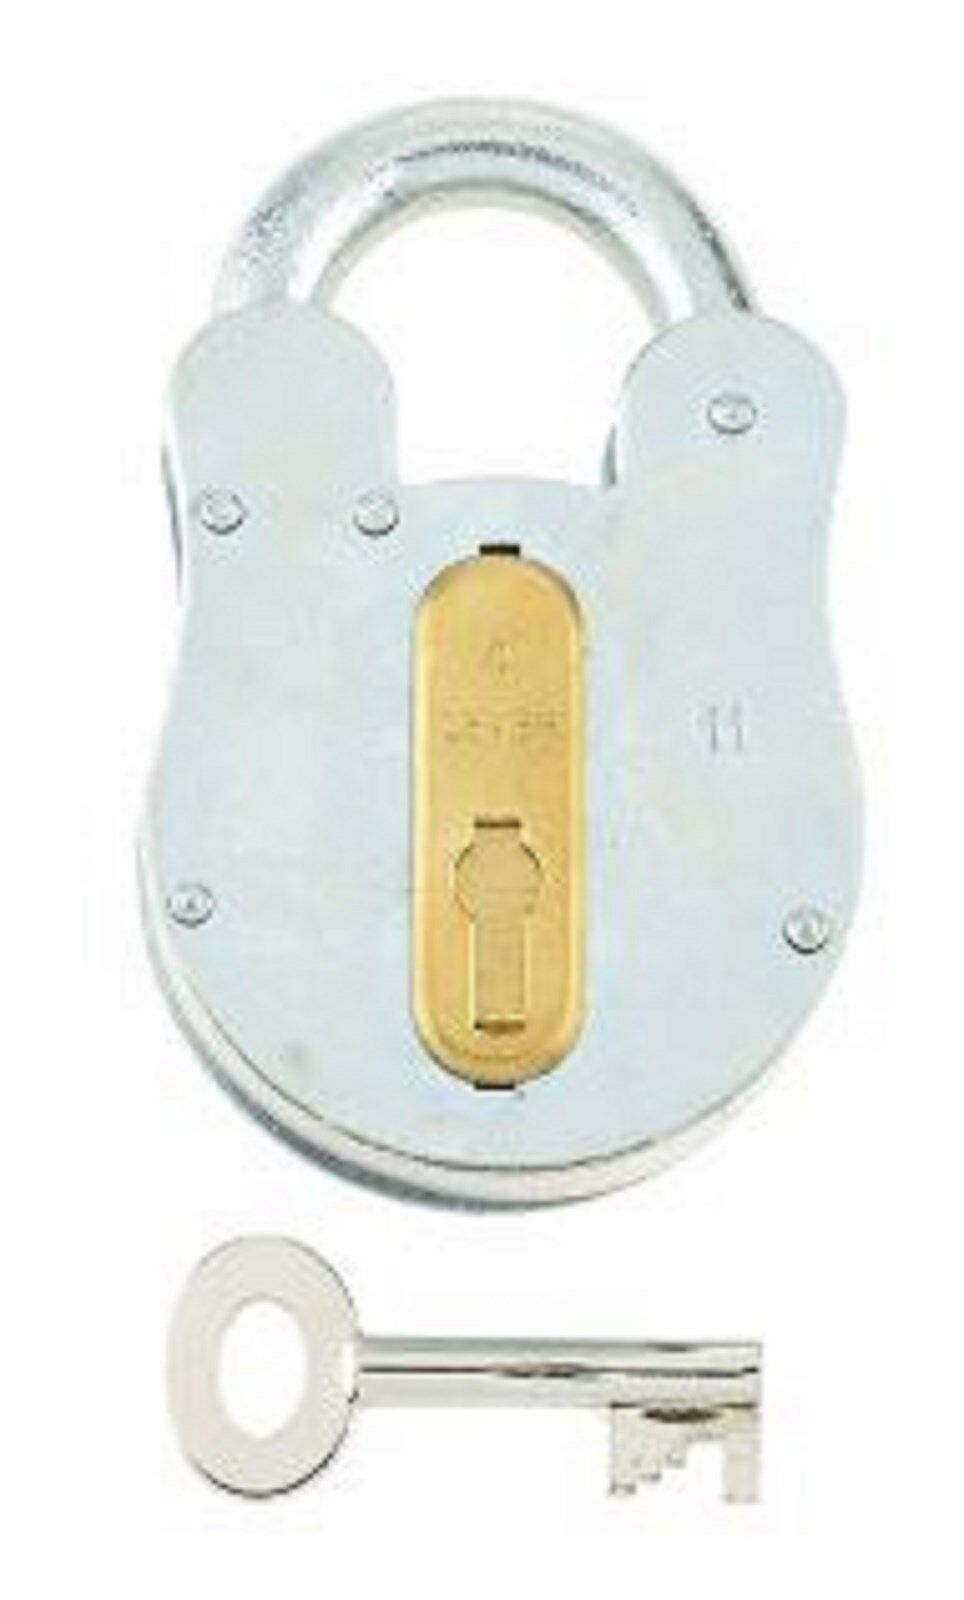 London Fire Brigade FB Padlock FB1 FB11 FB14 Silver Yellow +Extra Keys Available